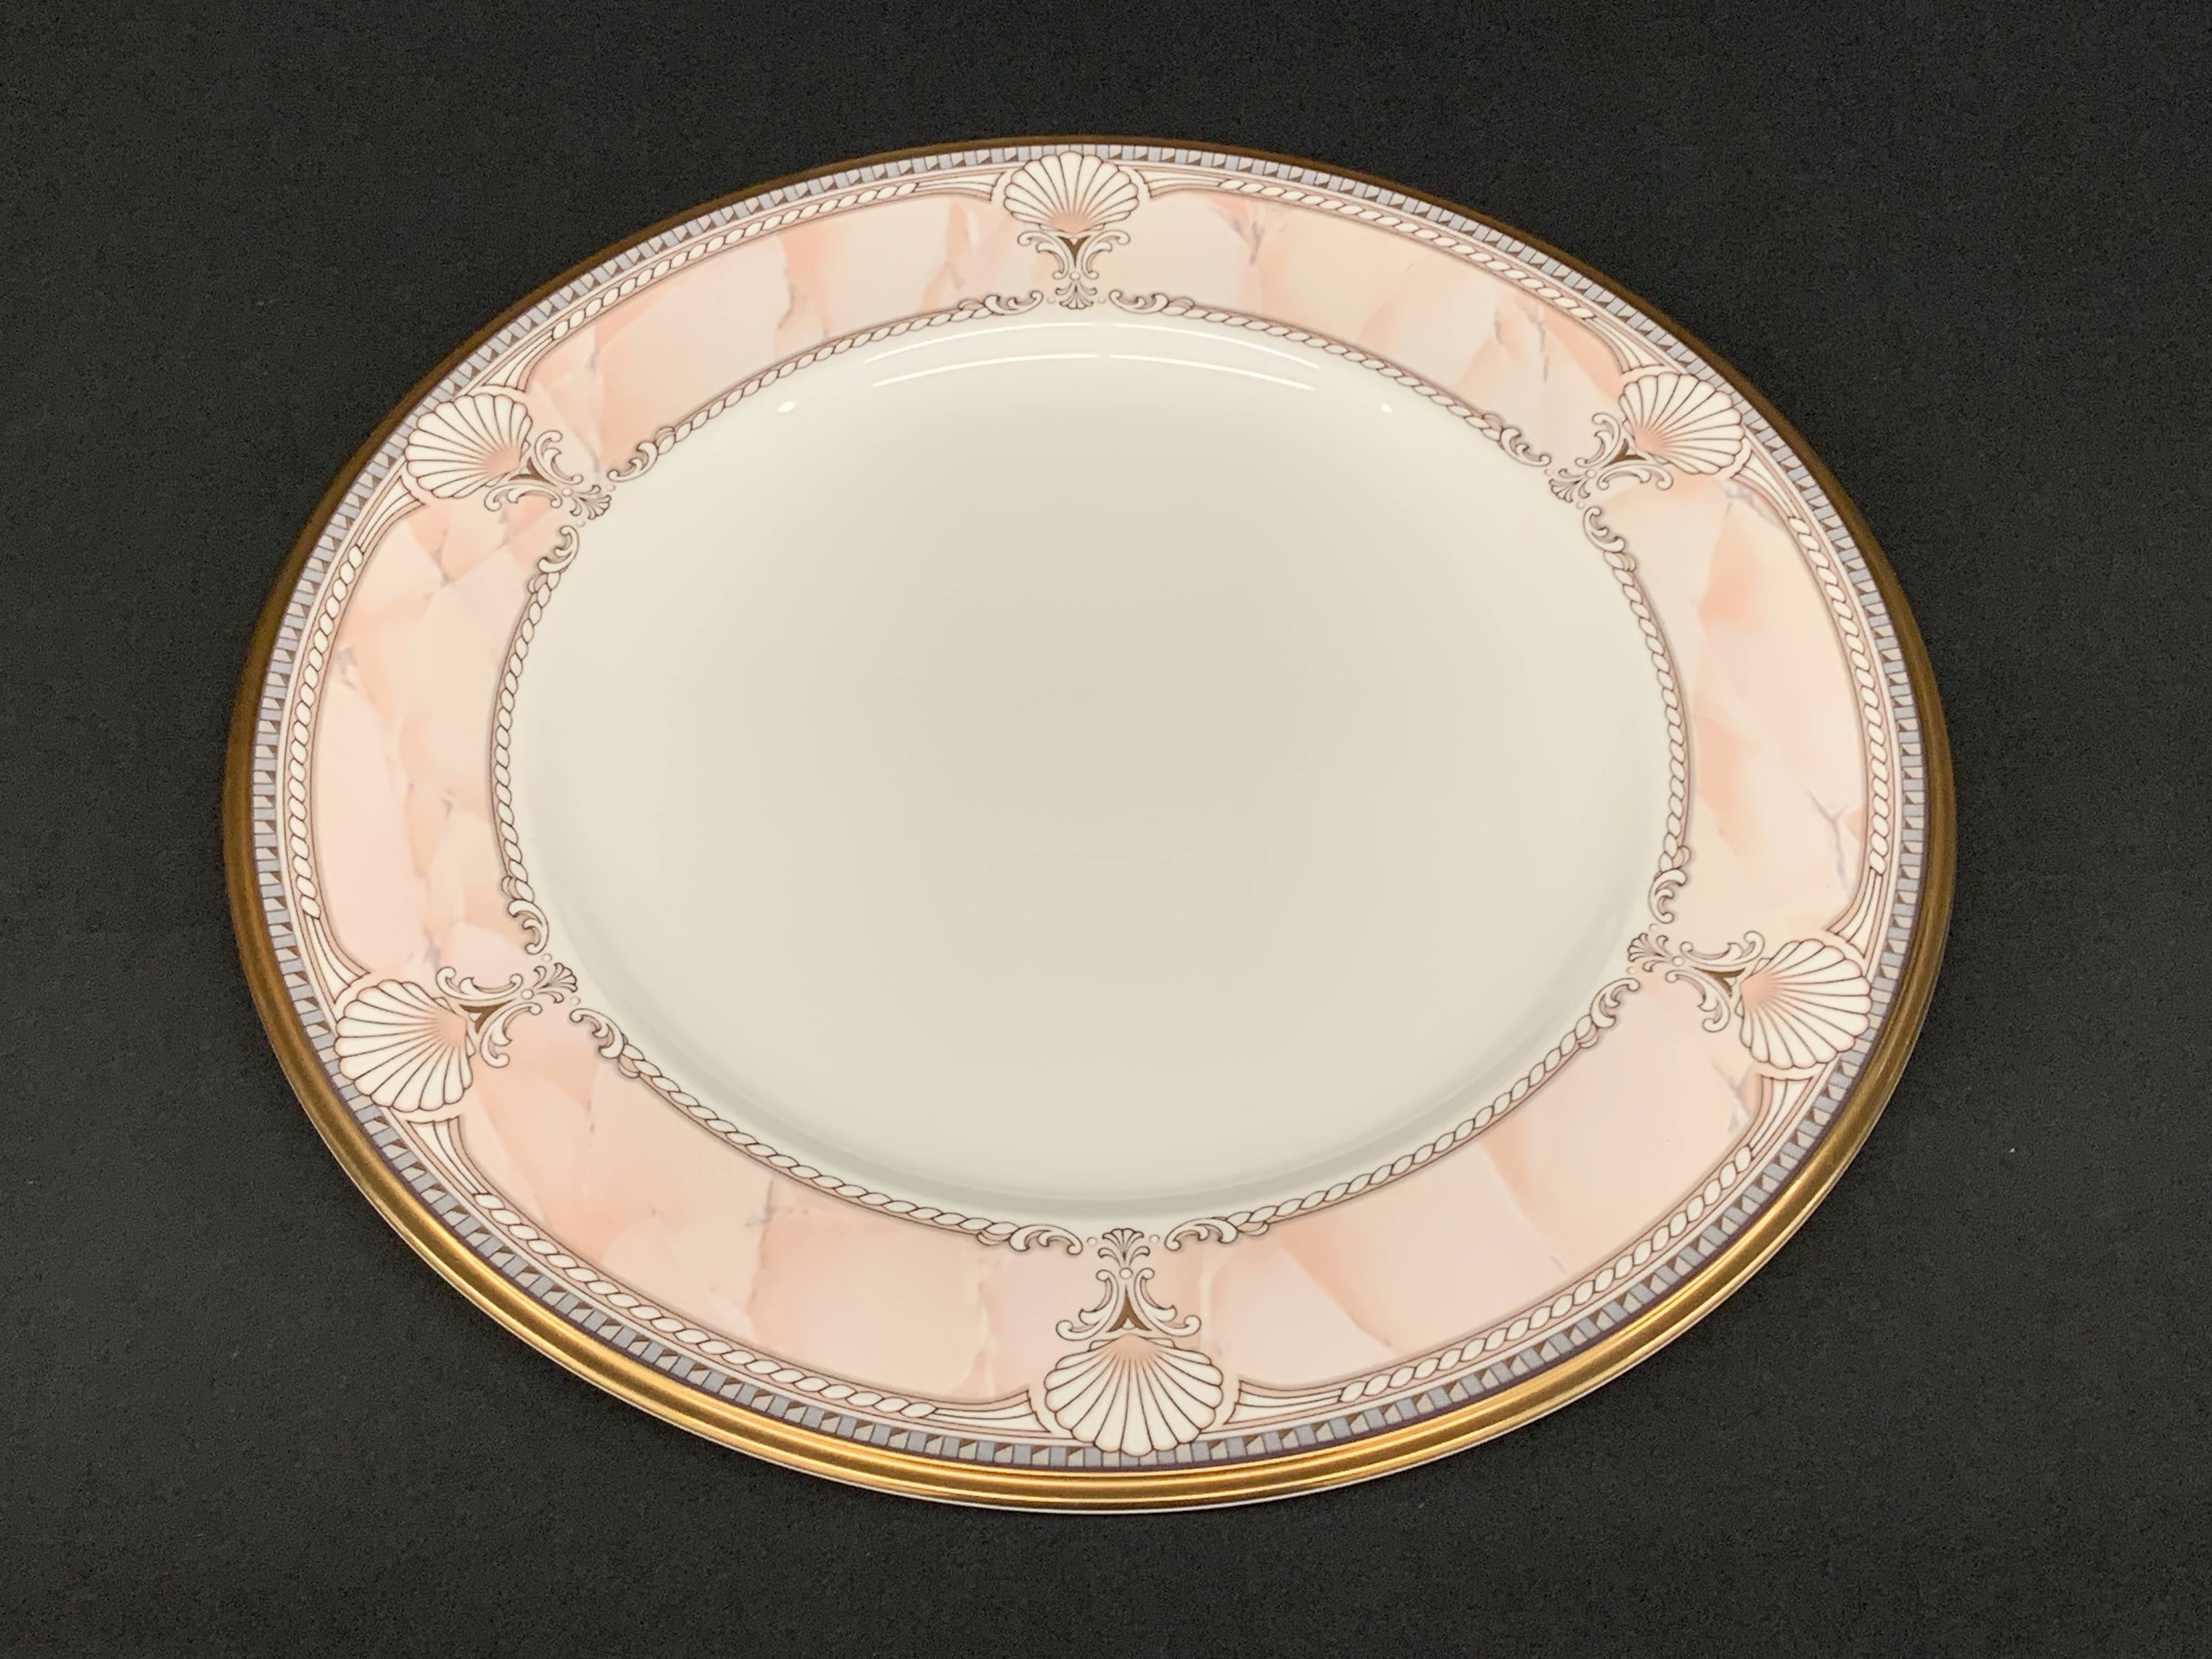 Noritake Pacific Majesty - Fine Porcelain China - 5 Piece Dinner Set - 1 place setting